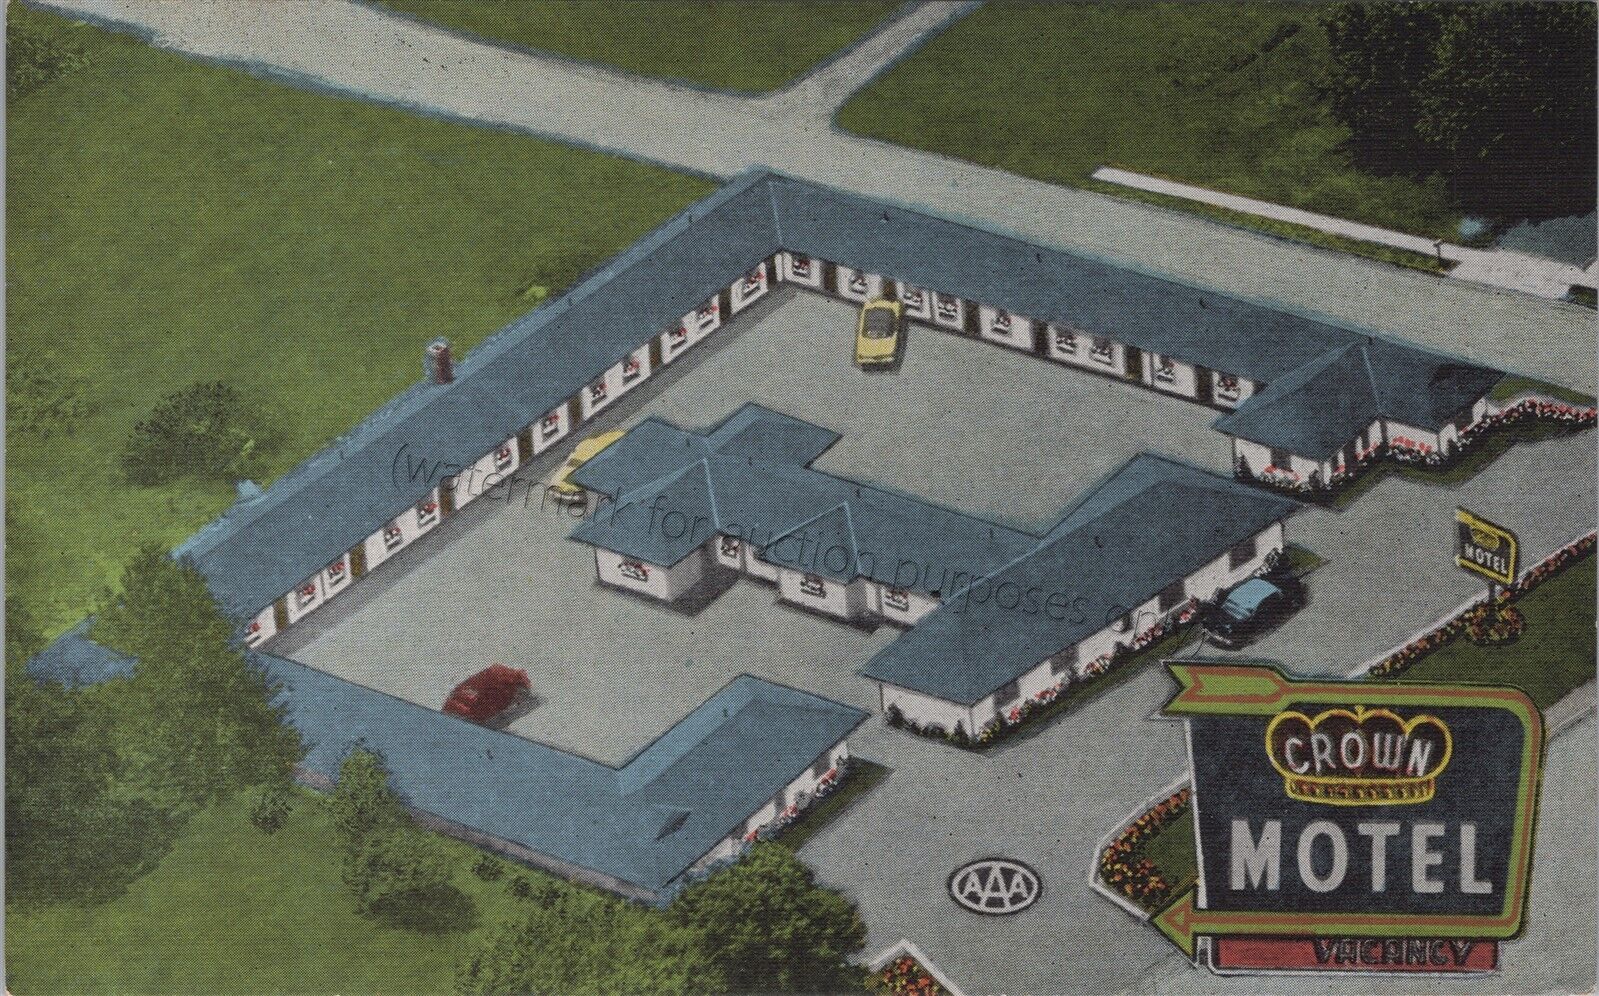 Massillon, OH: Crown Motel - Vintage Stark County, Ohio Illustrated Postcard